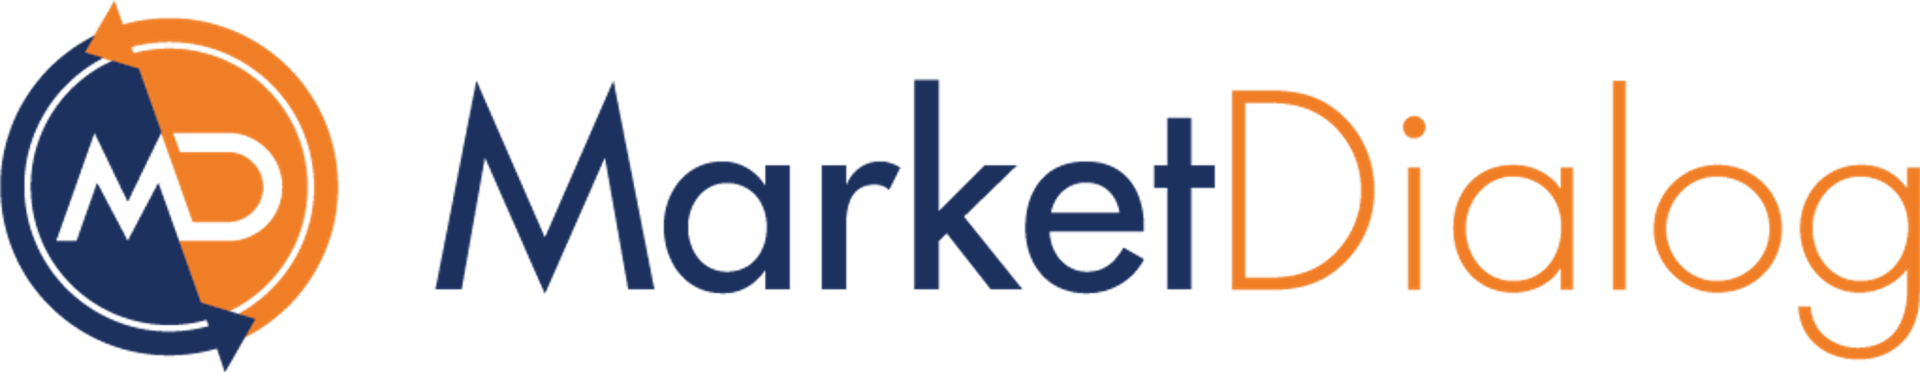 Logo MarketDialog Blau Orange Quer